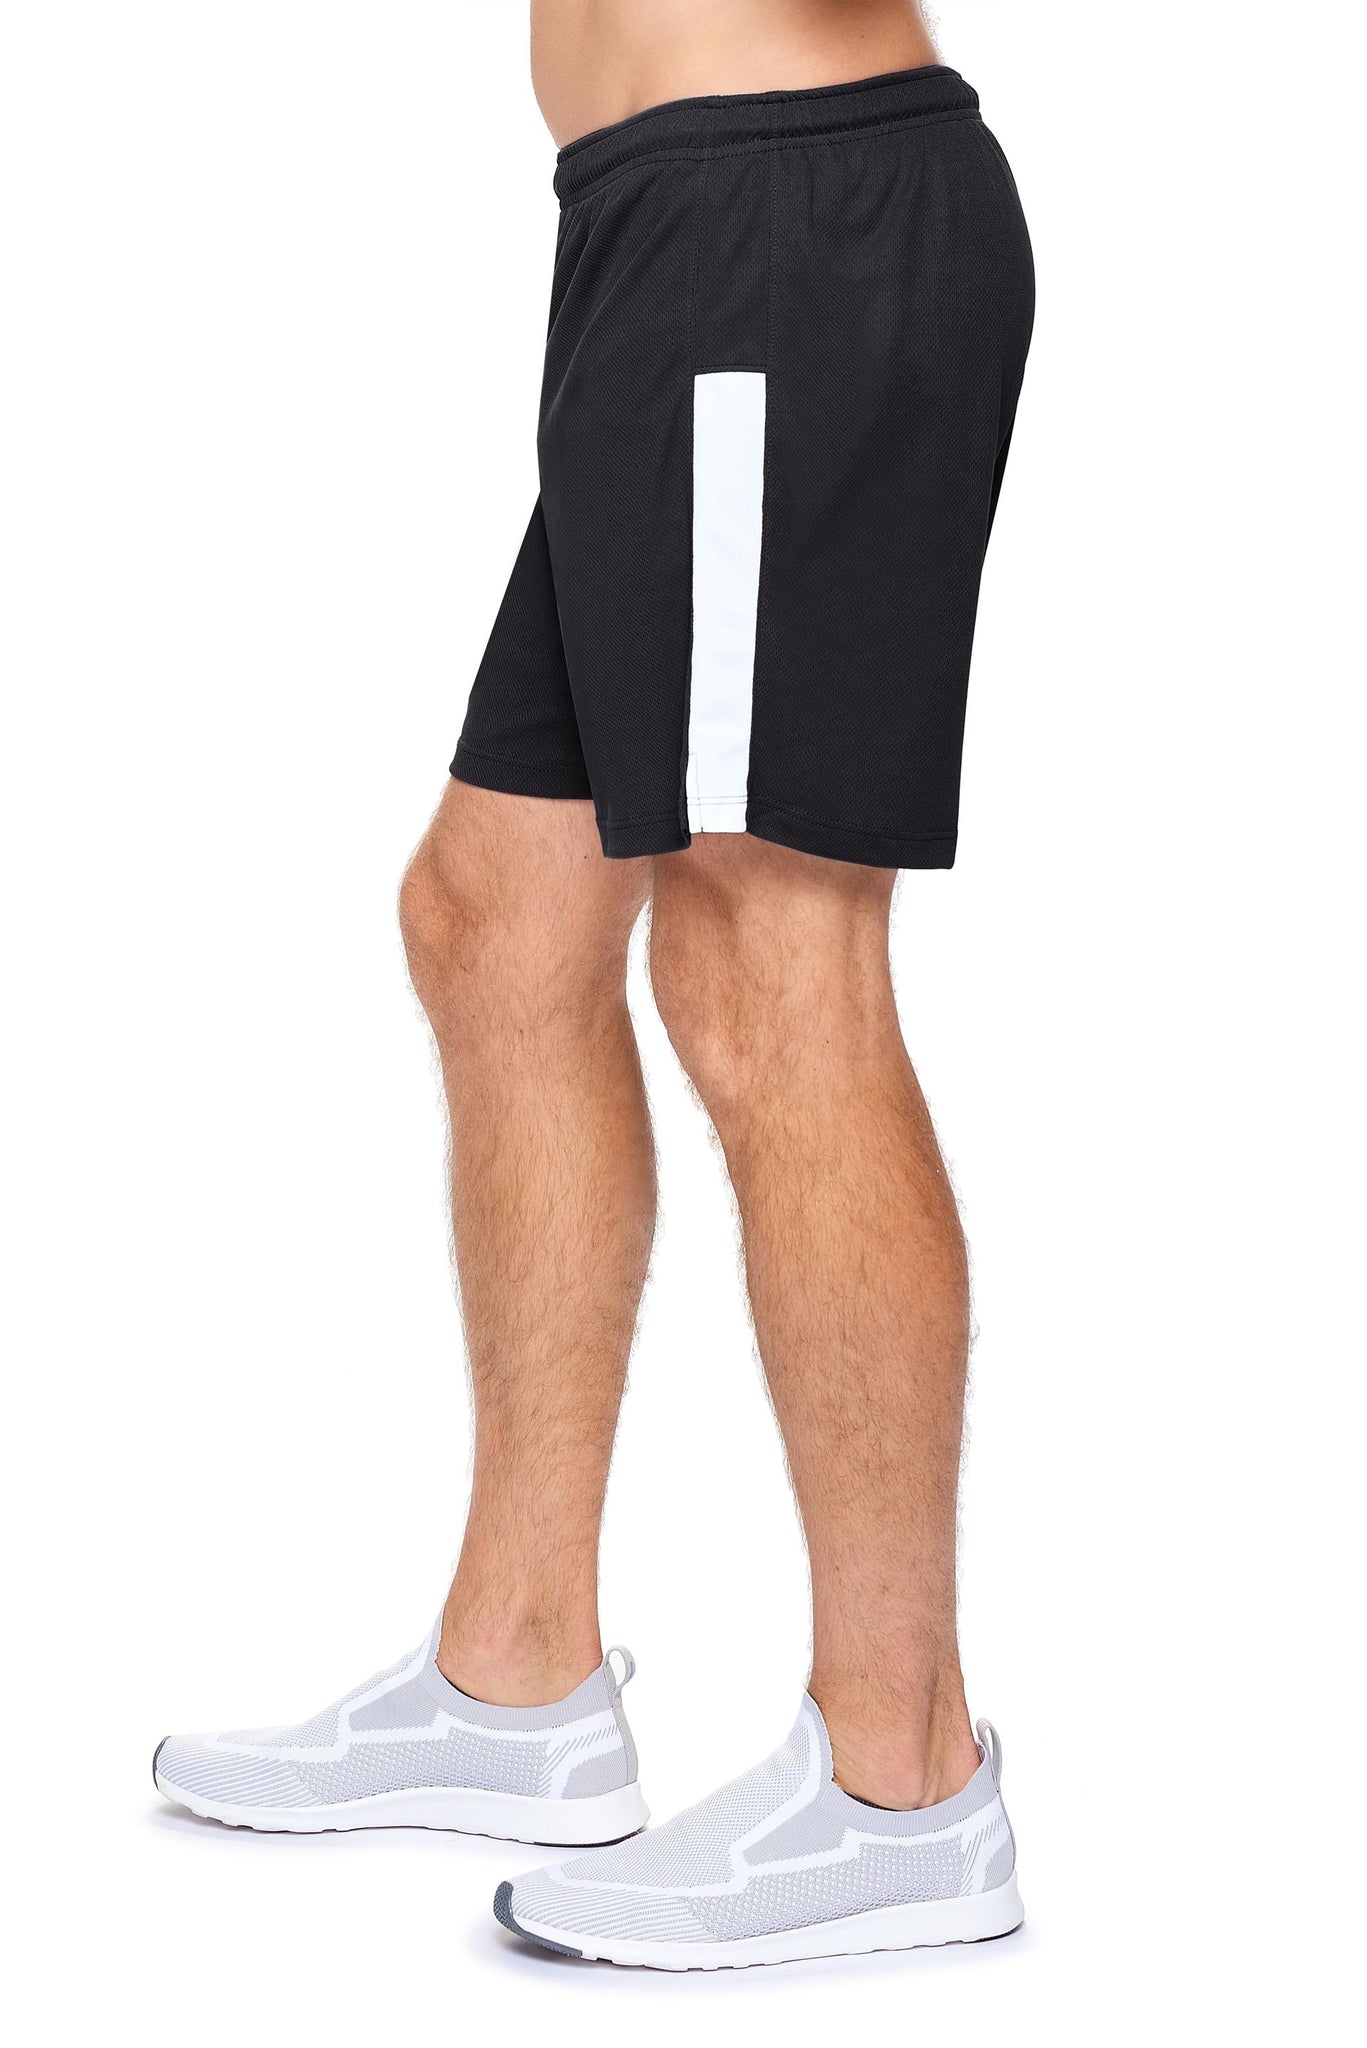 Expert Brand Wholesale Blanks Made in USA Men's Oxymesh™ Premium Shorts in black image 2#black